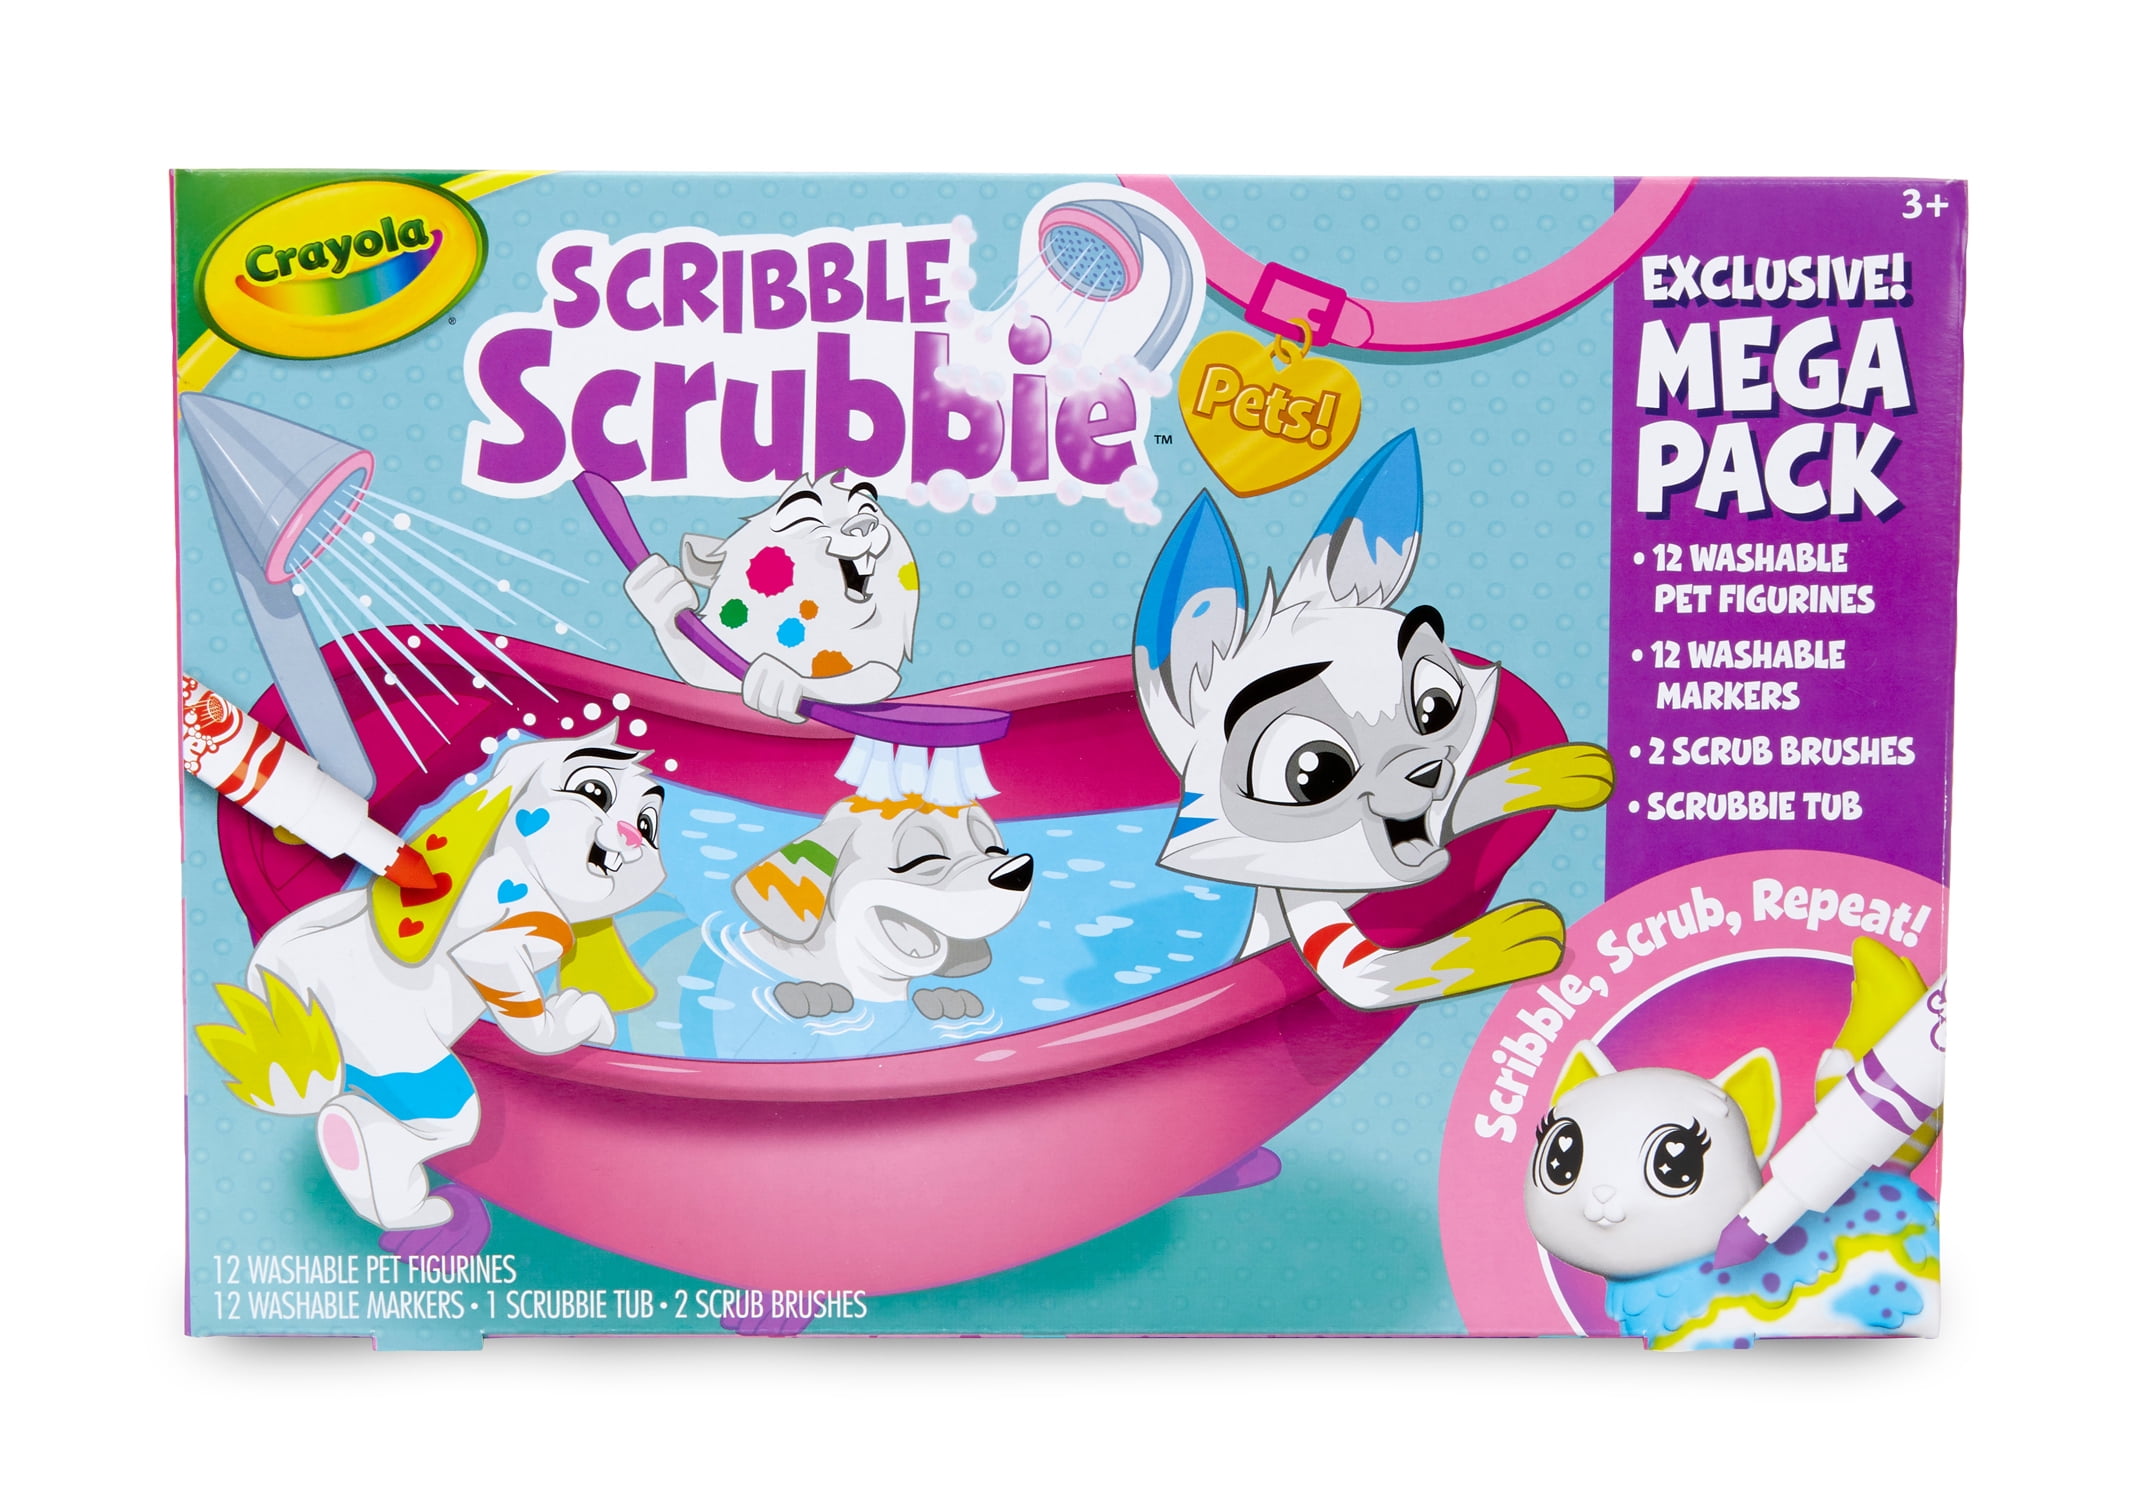 Crayola Scribble Scrubbies Mega Tub Set – Includes all 12 pets